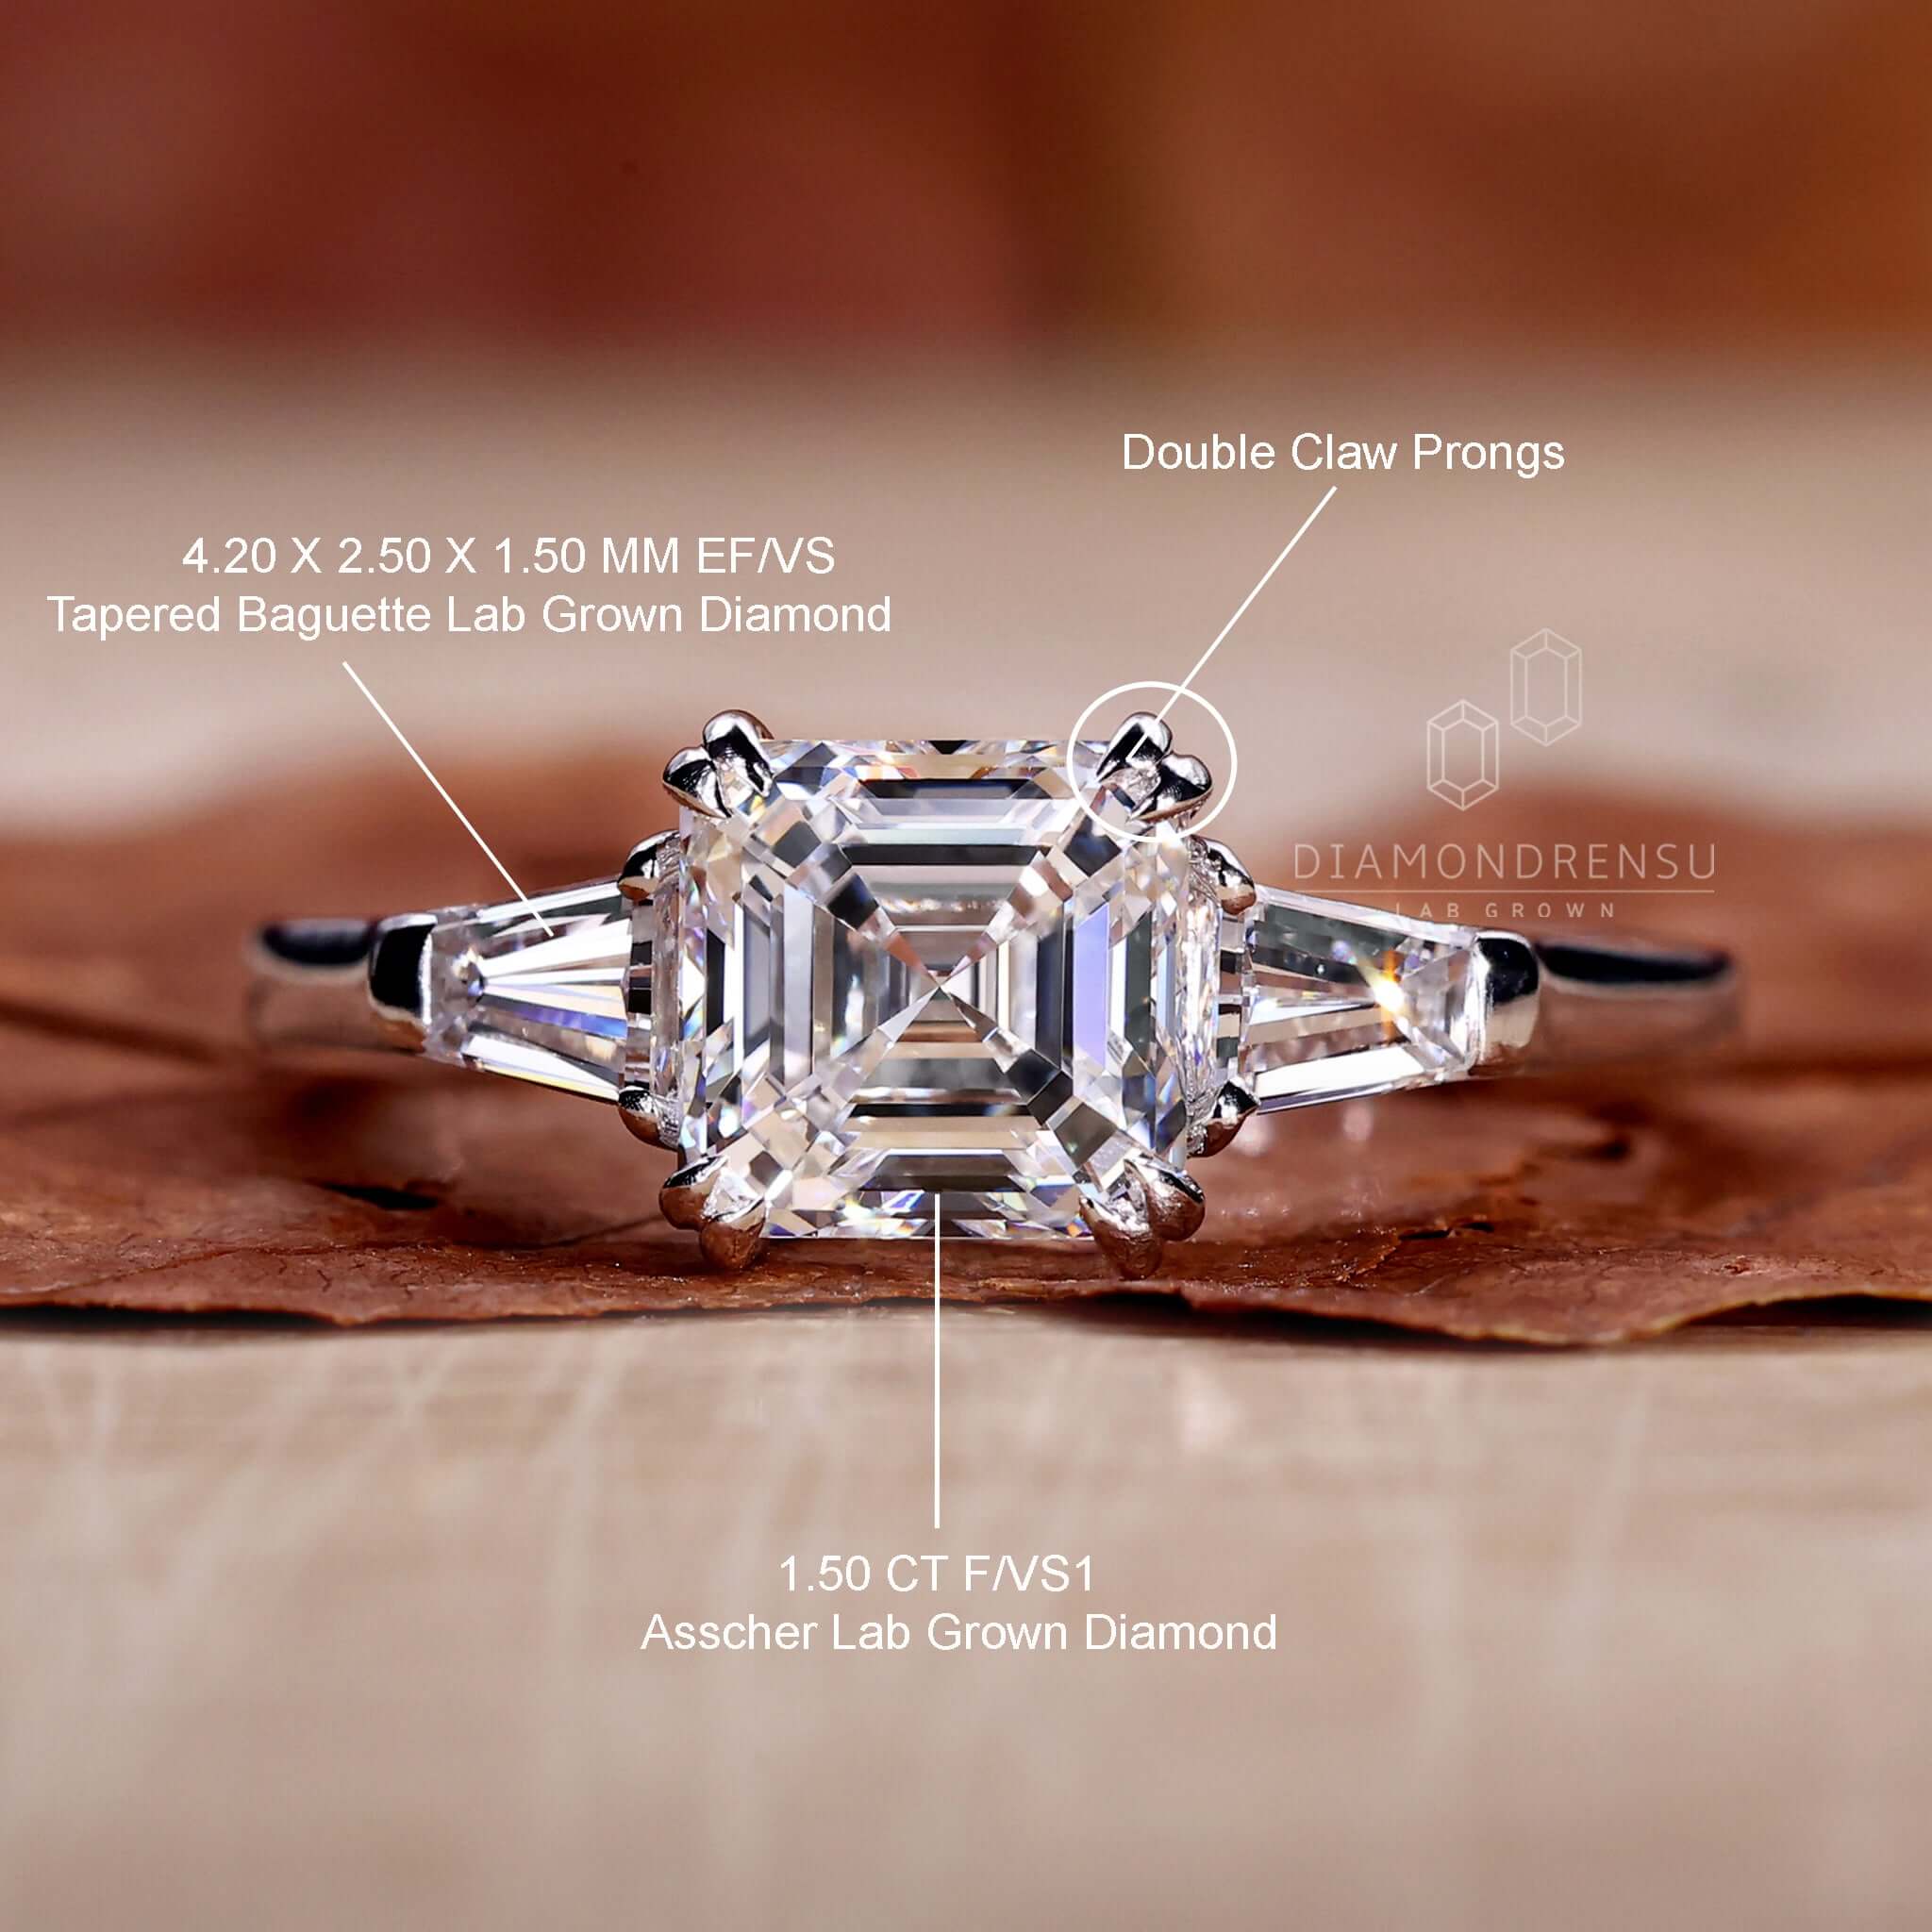 Art Deco 2.85 Carat Asscher-Cut Diamond Engagement Ring by Birks - GIA I VS1